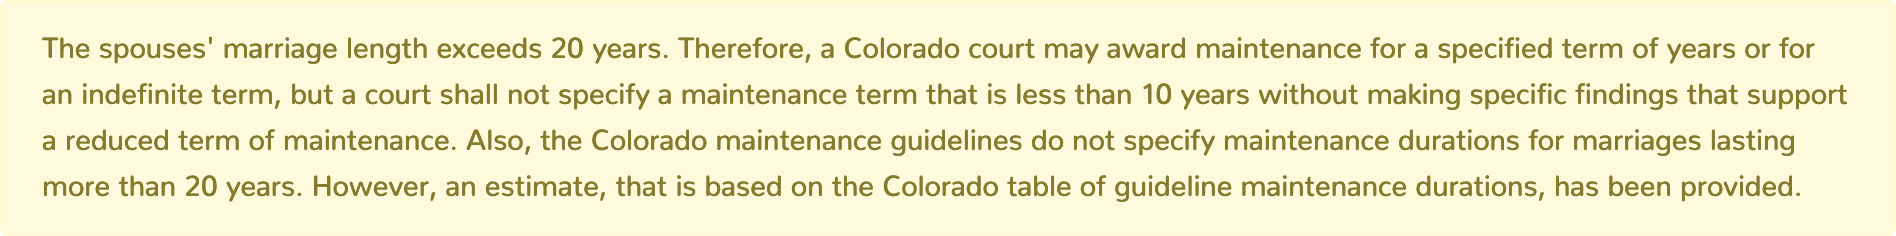 Colorado Maintenance Calculator marriage length greater than twenty years